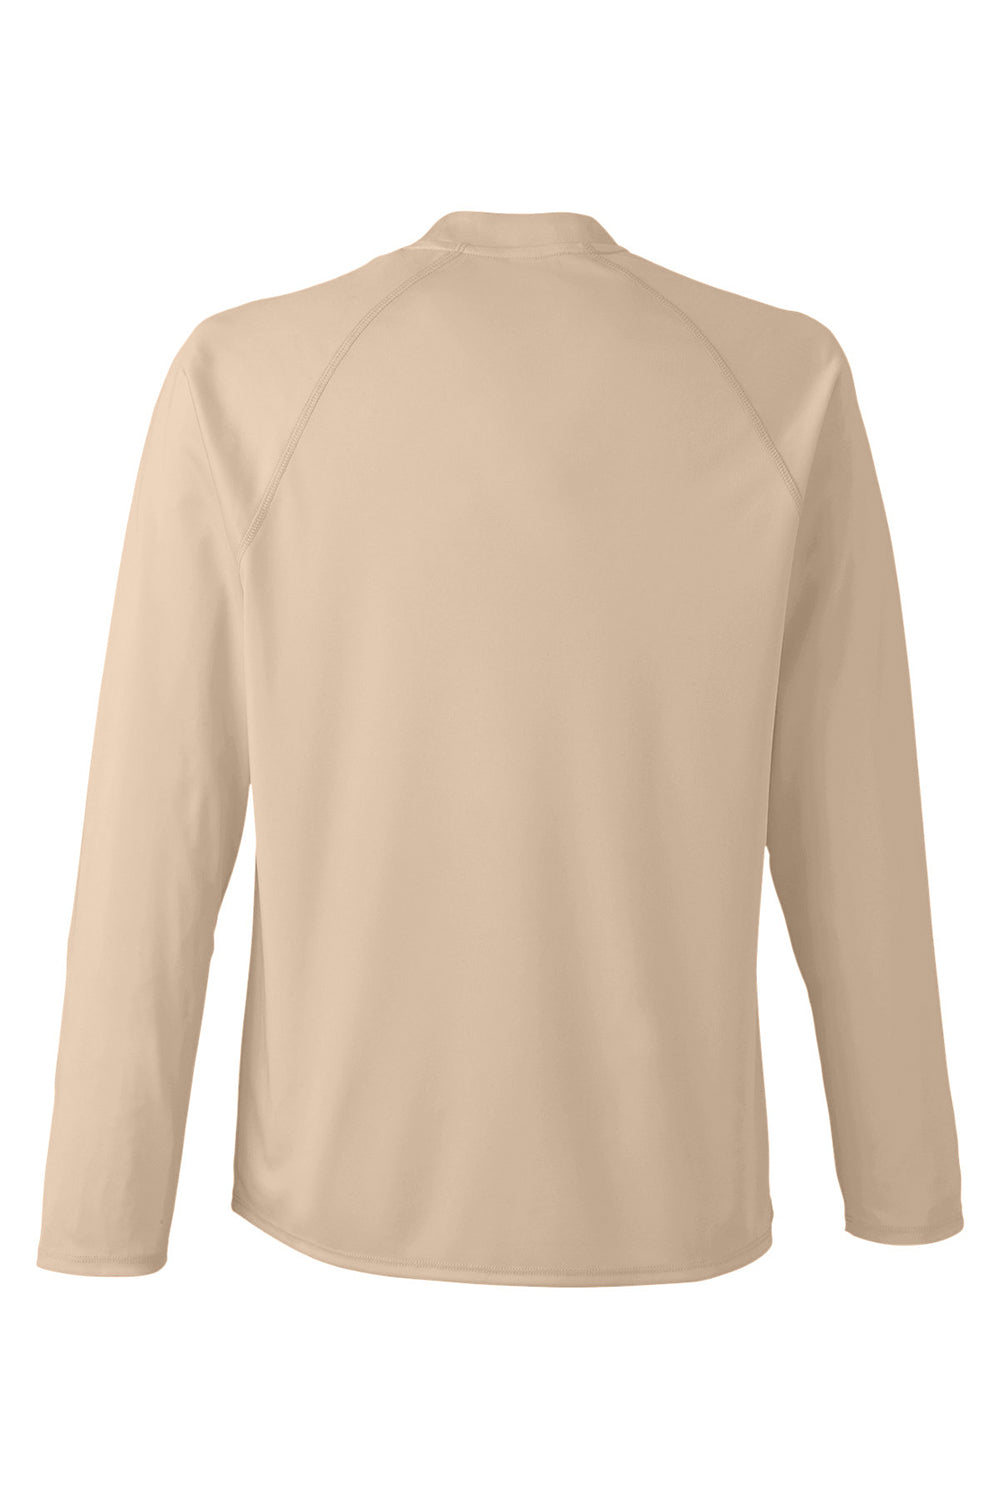 Core 365 CE110 Mens Ultra MVP Raglan Long Sleeve T-Shirt Stone Flat Back